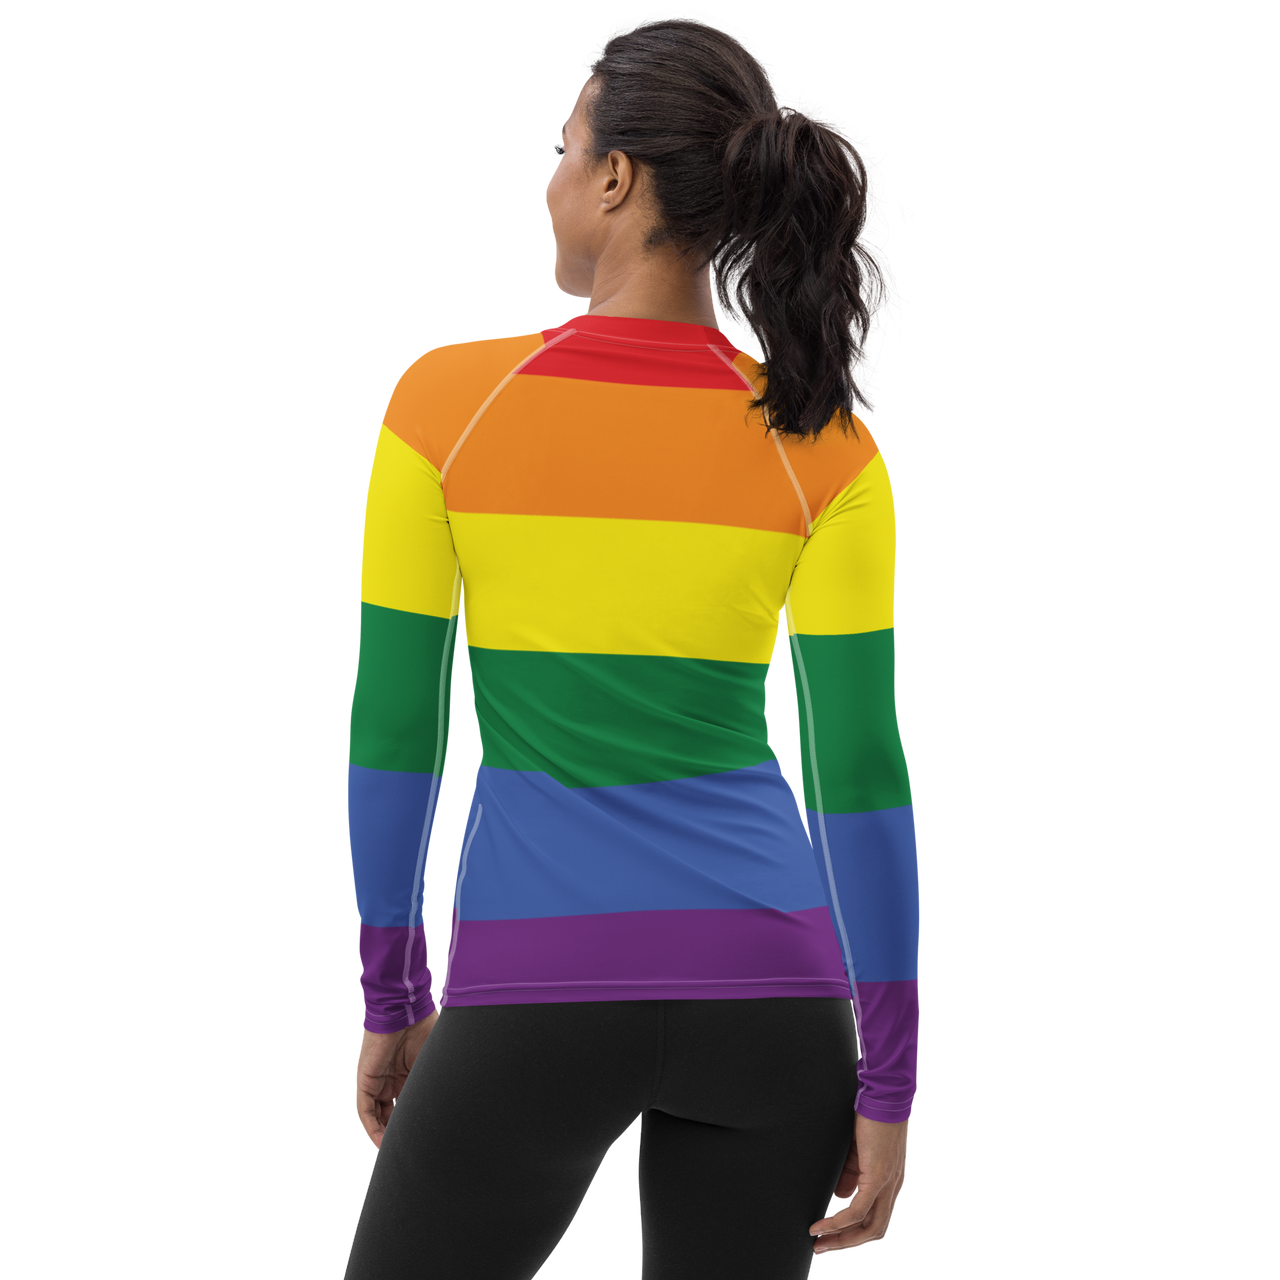 Pride Flag LGBTQ Long Sleeve Shirt Women’s Size SHAVA